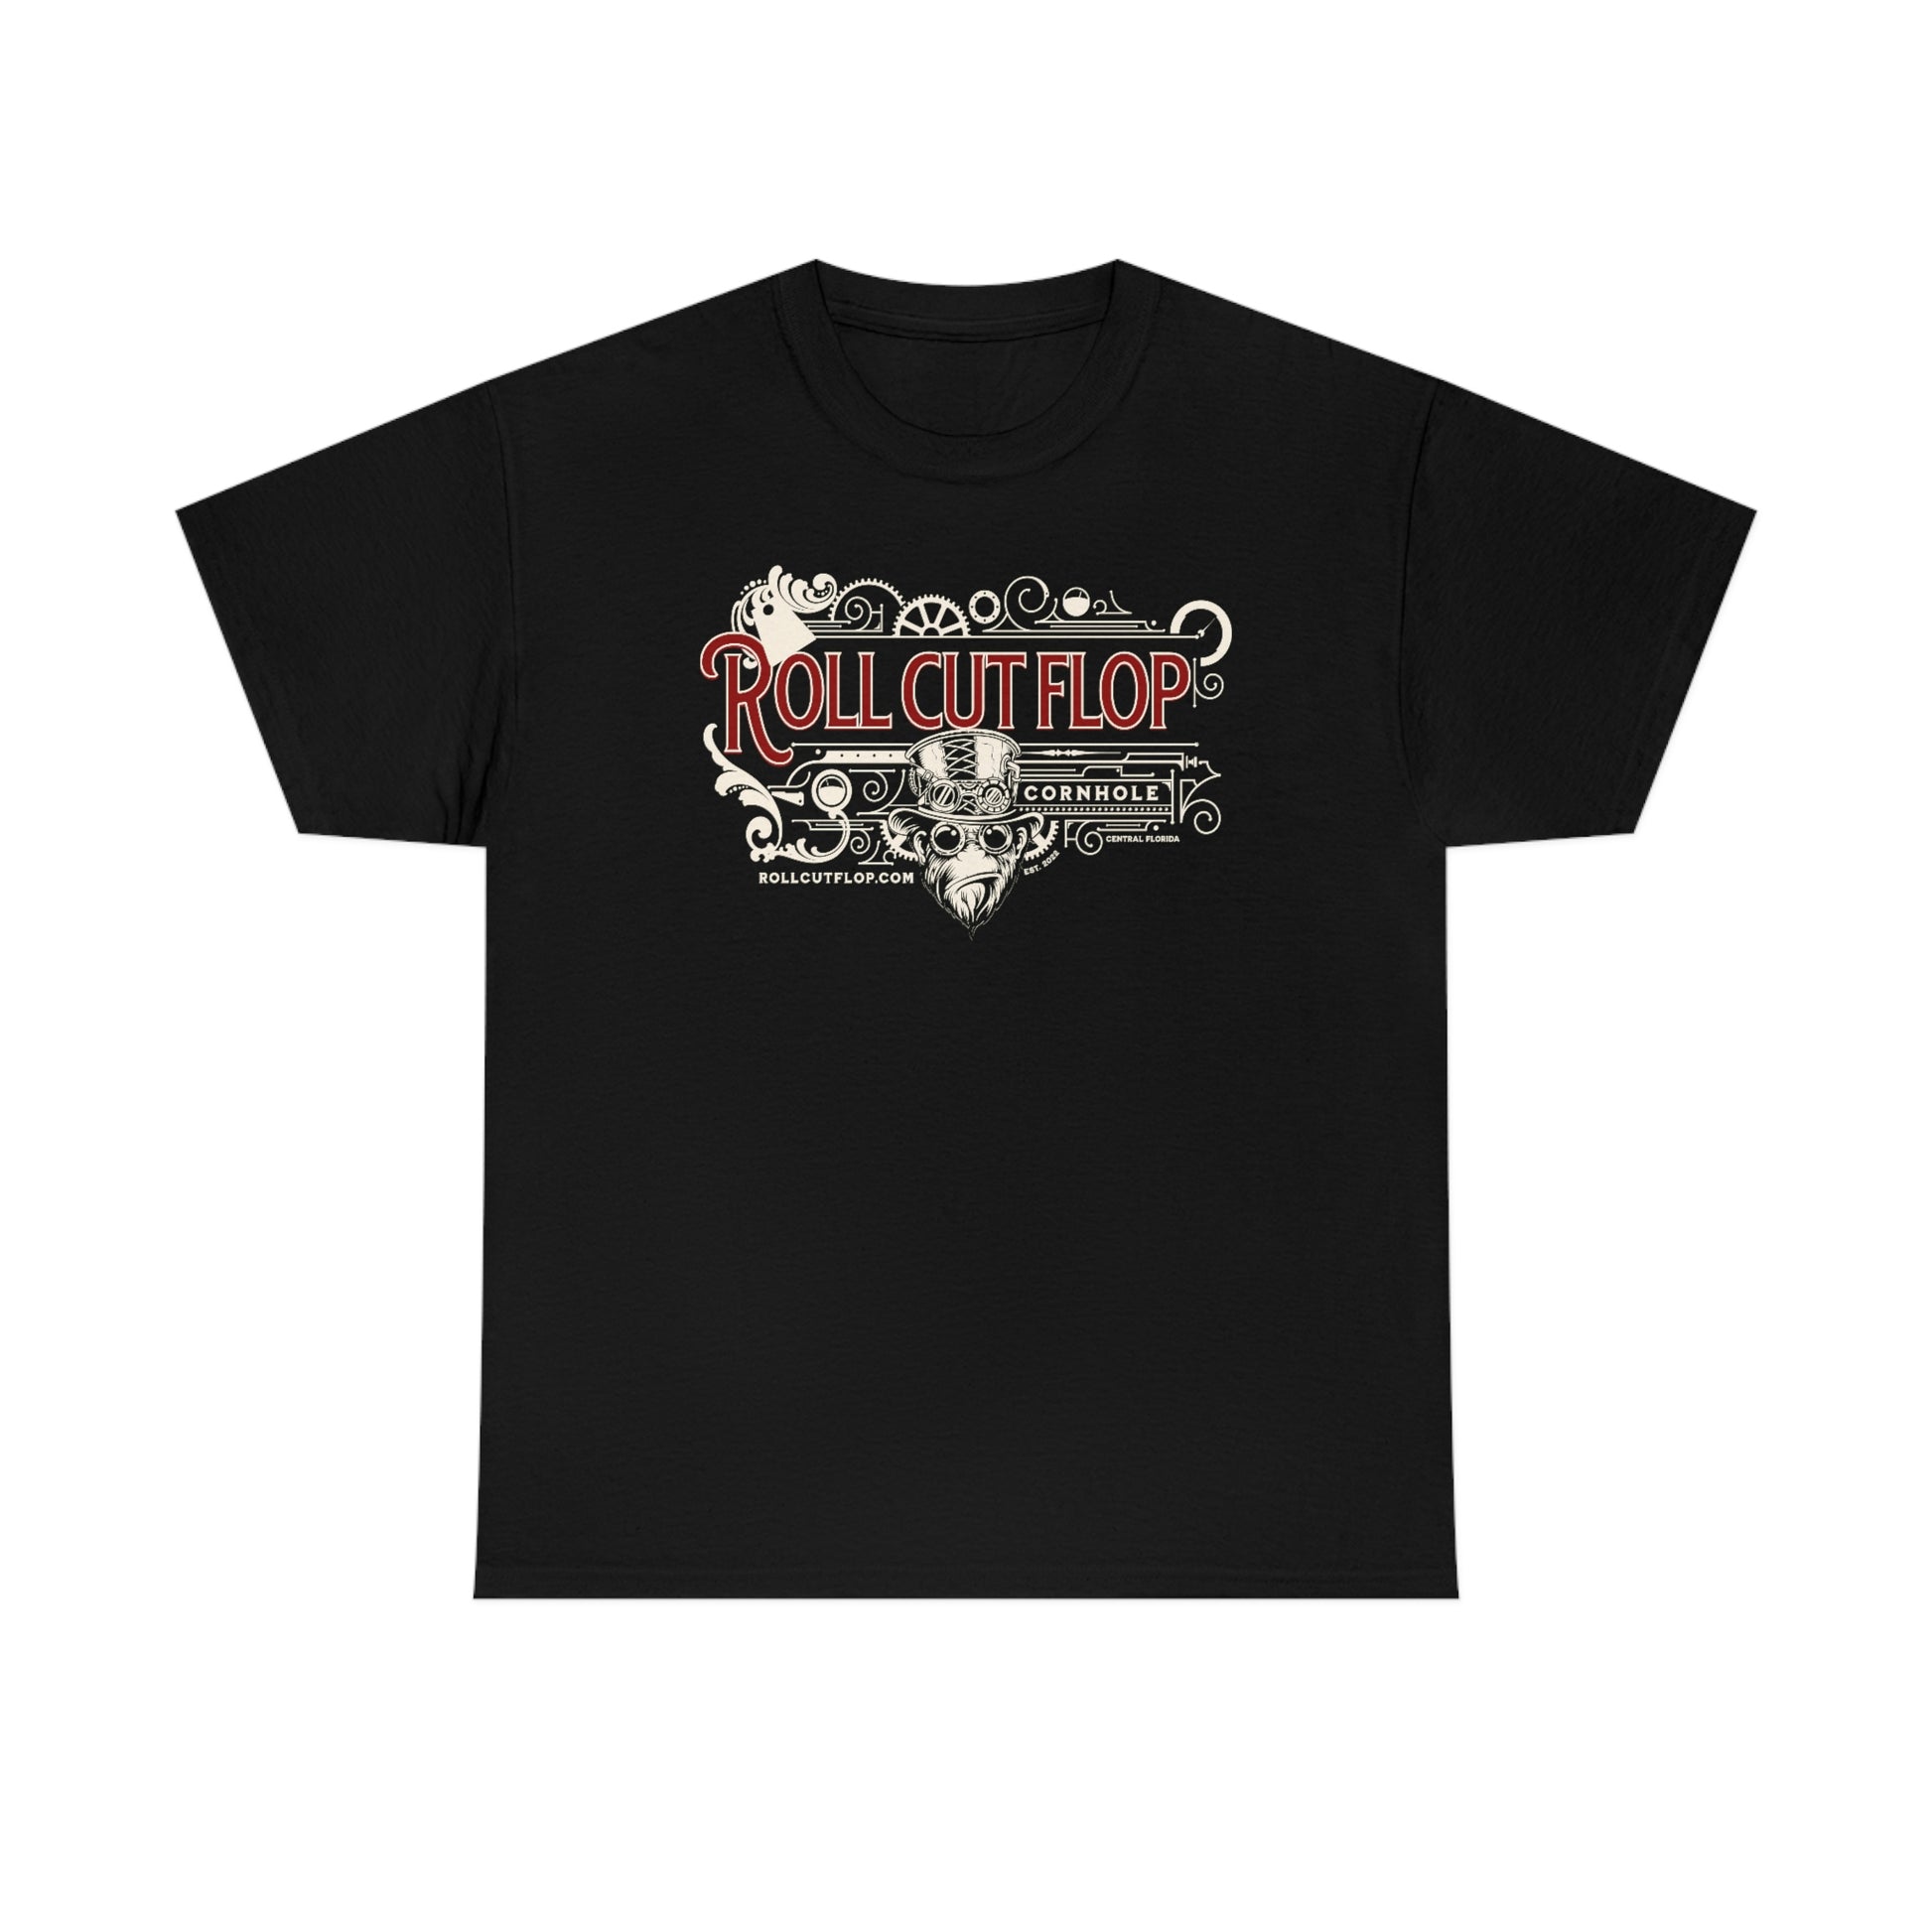 Roll Cut Flop Cornhole™ Unisex Black T-shirt - Steampunk Vintage Red Scroll